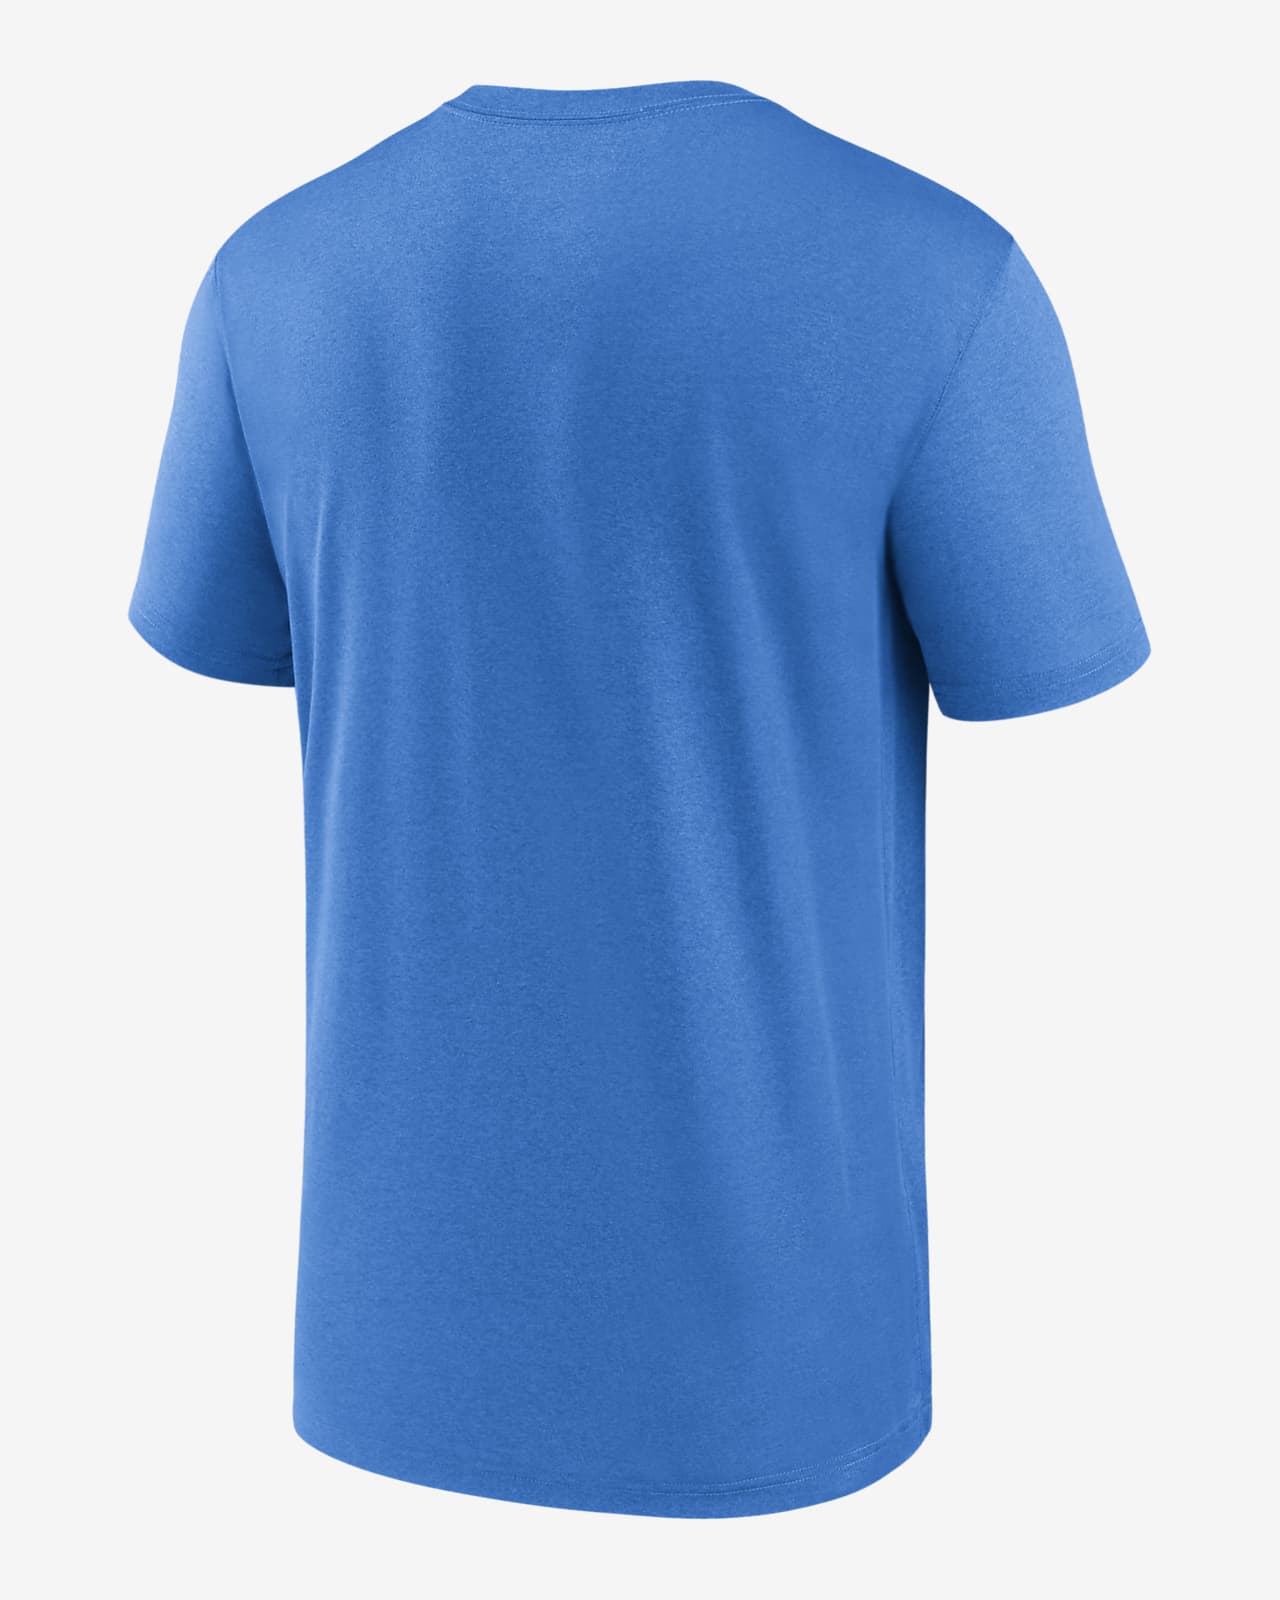 Nike Dri-FIT Wordmark Legend (NFL Los Angeles Chargers) Men's T-Shirt